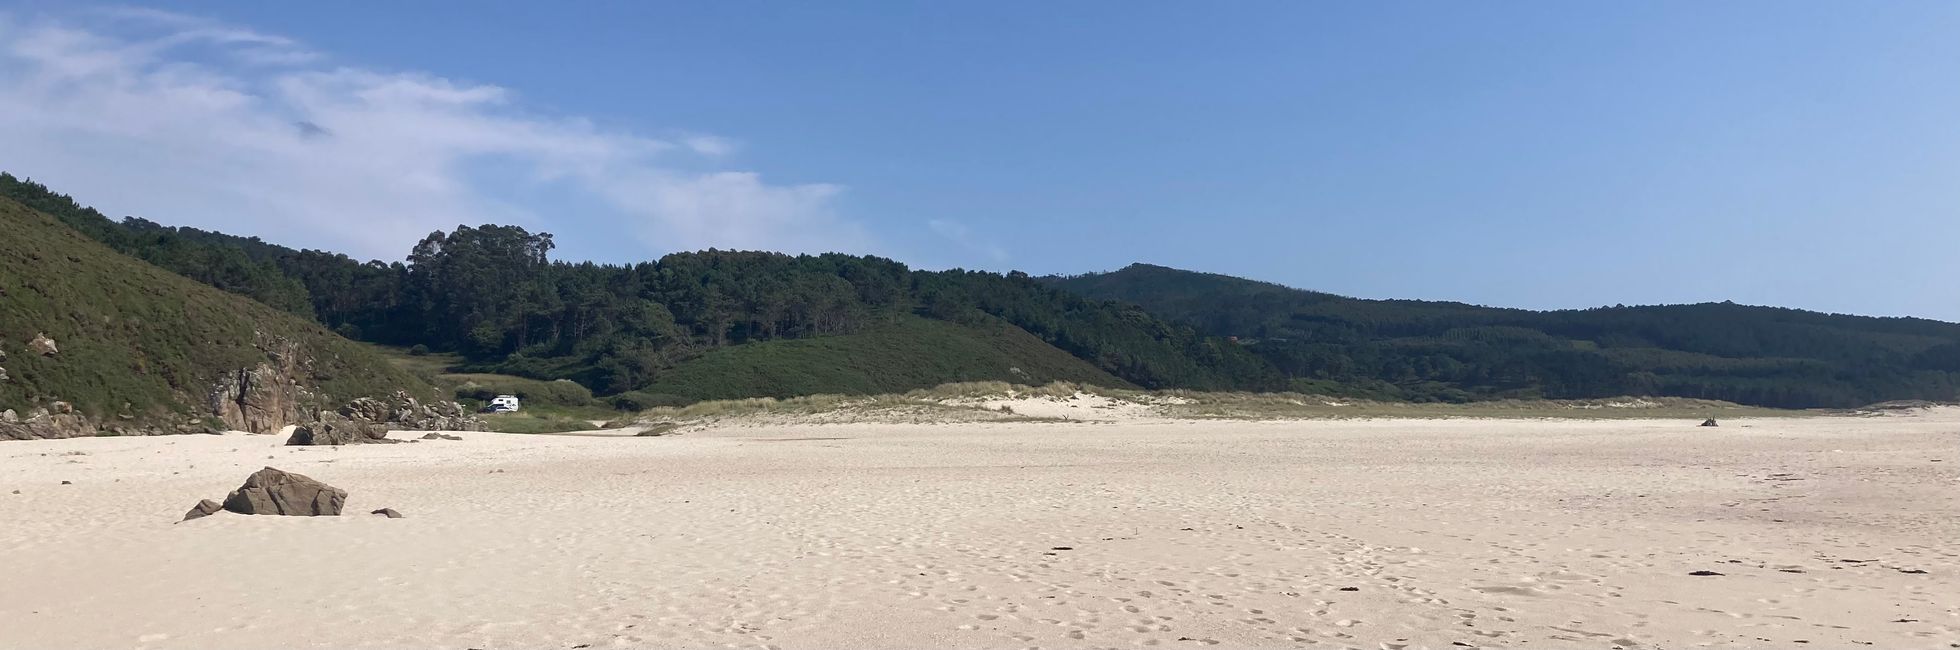 Galicia, Costa Verde සහ Dune du Pilat හරහා නිවස